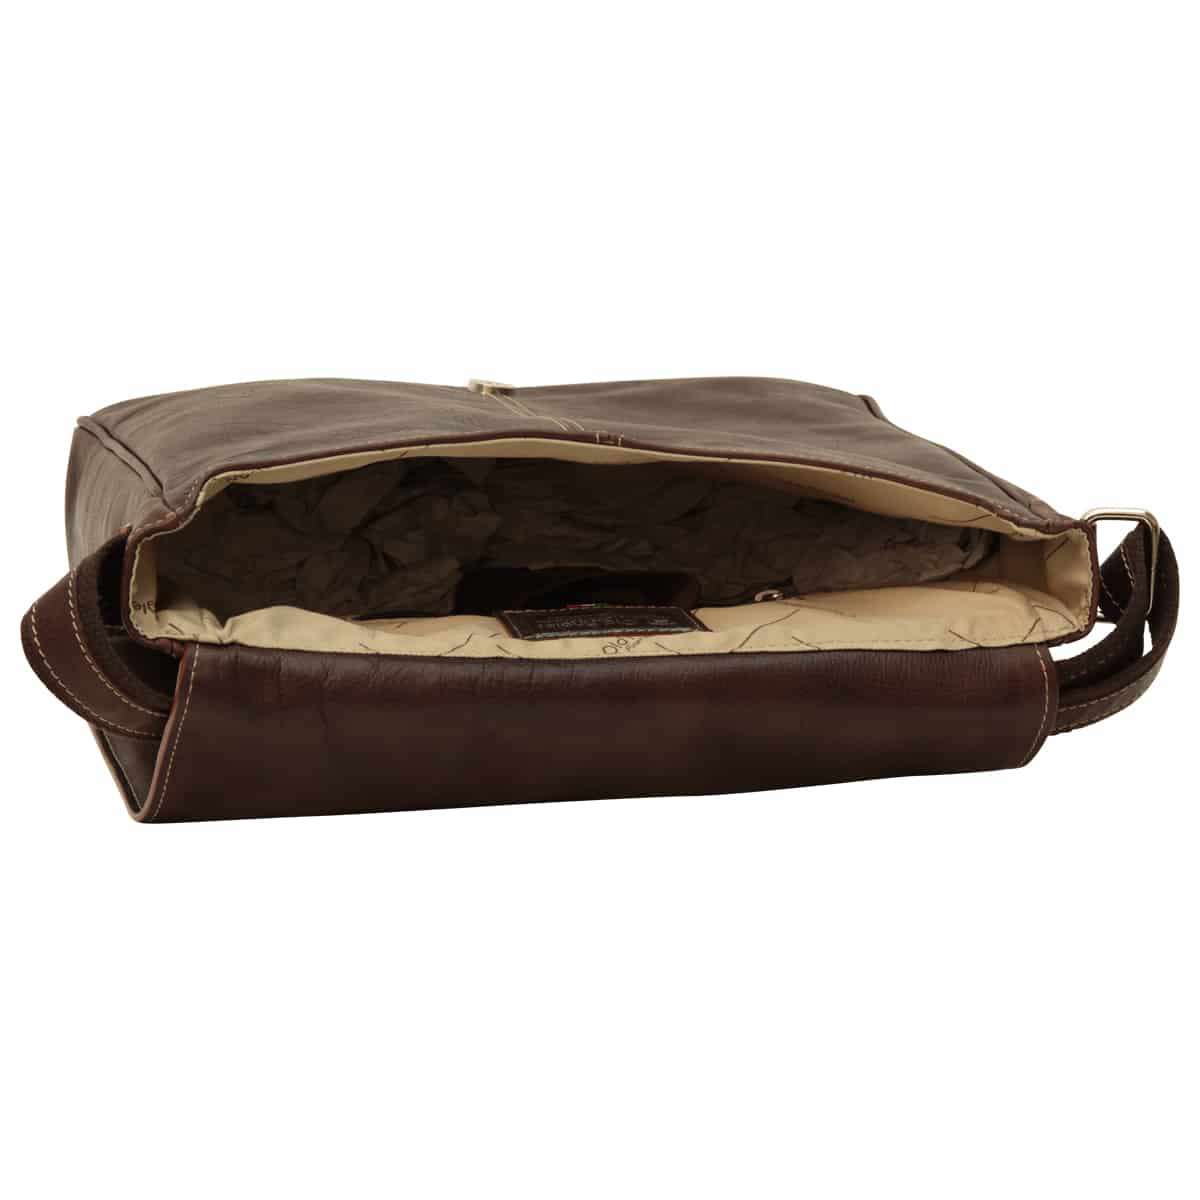 Lightweight Messenger Bag - Dark Brown | 072661TM | EURO | Old Angler Firenze